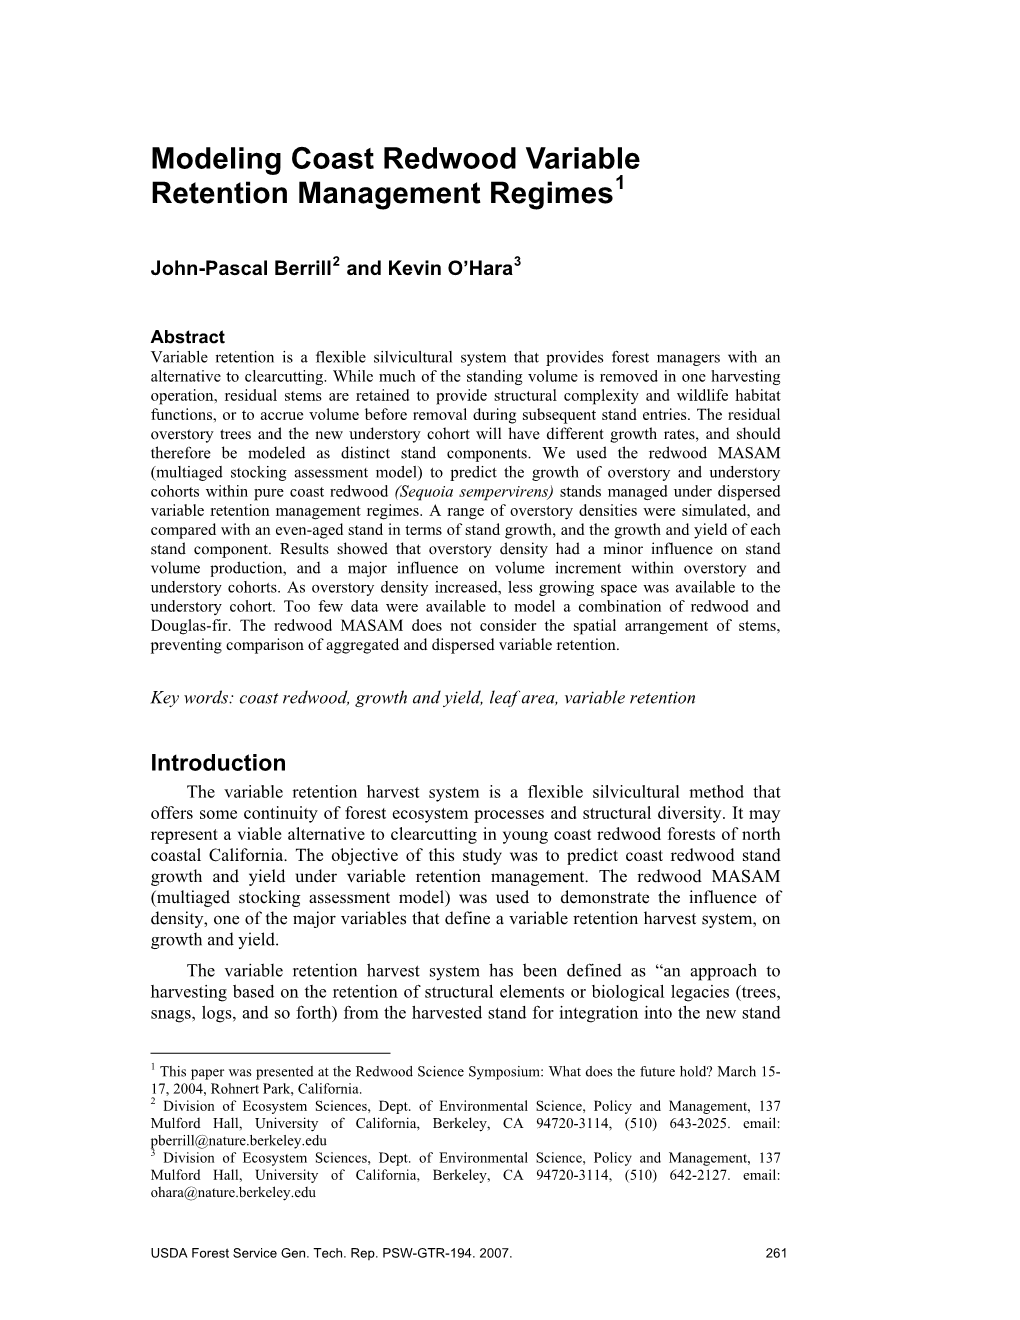 Modeling Coast Redwood Variable Retention Management Regimes1